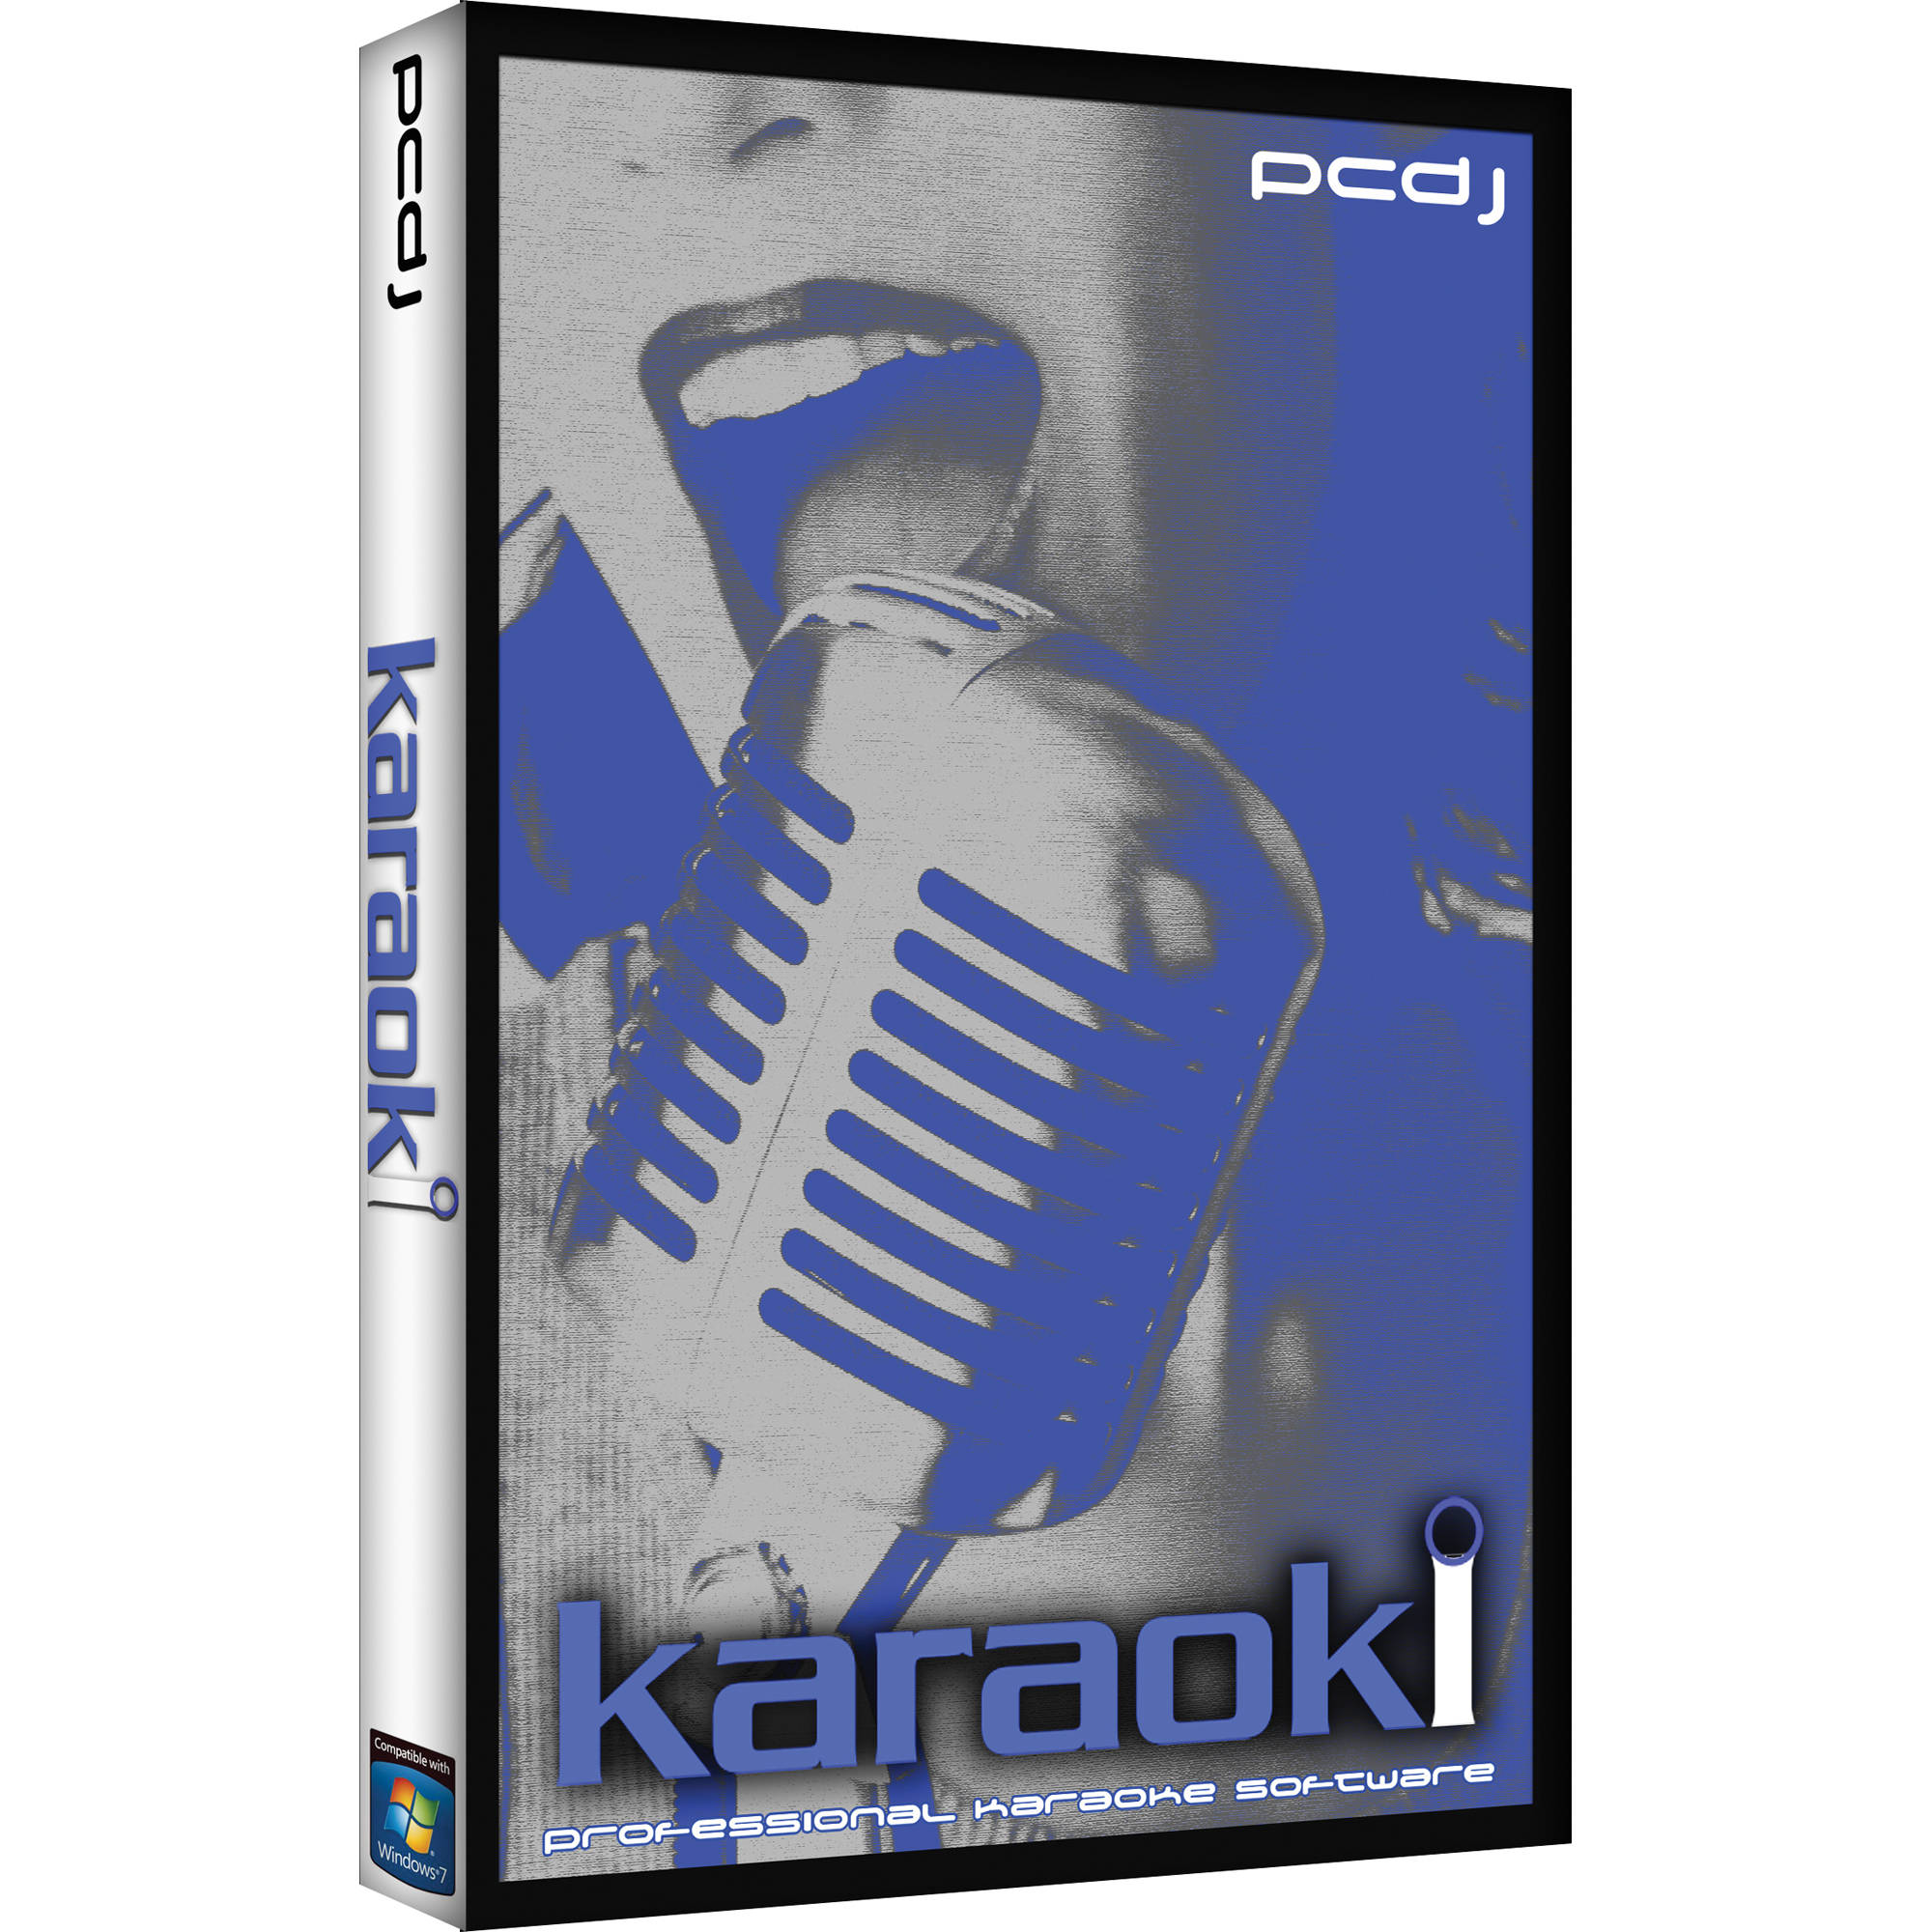 Professional Karaoke Programs For Laptops